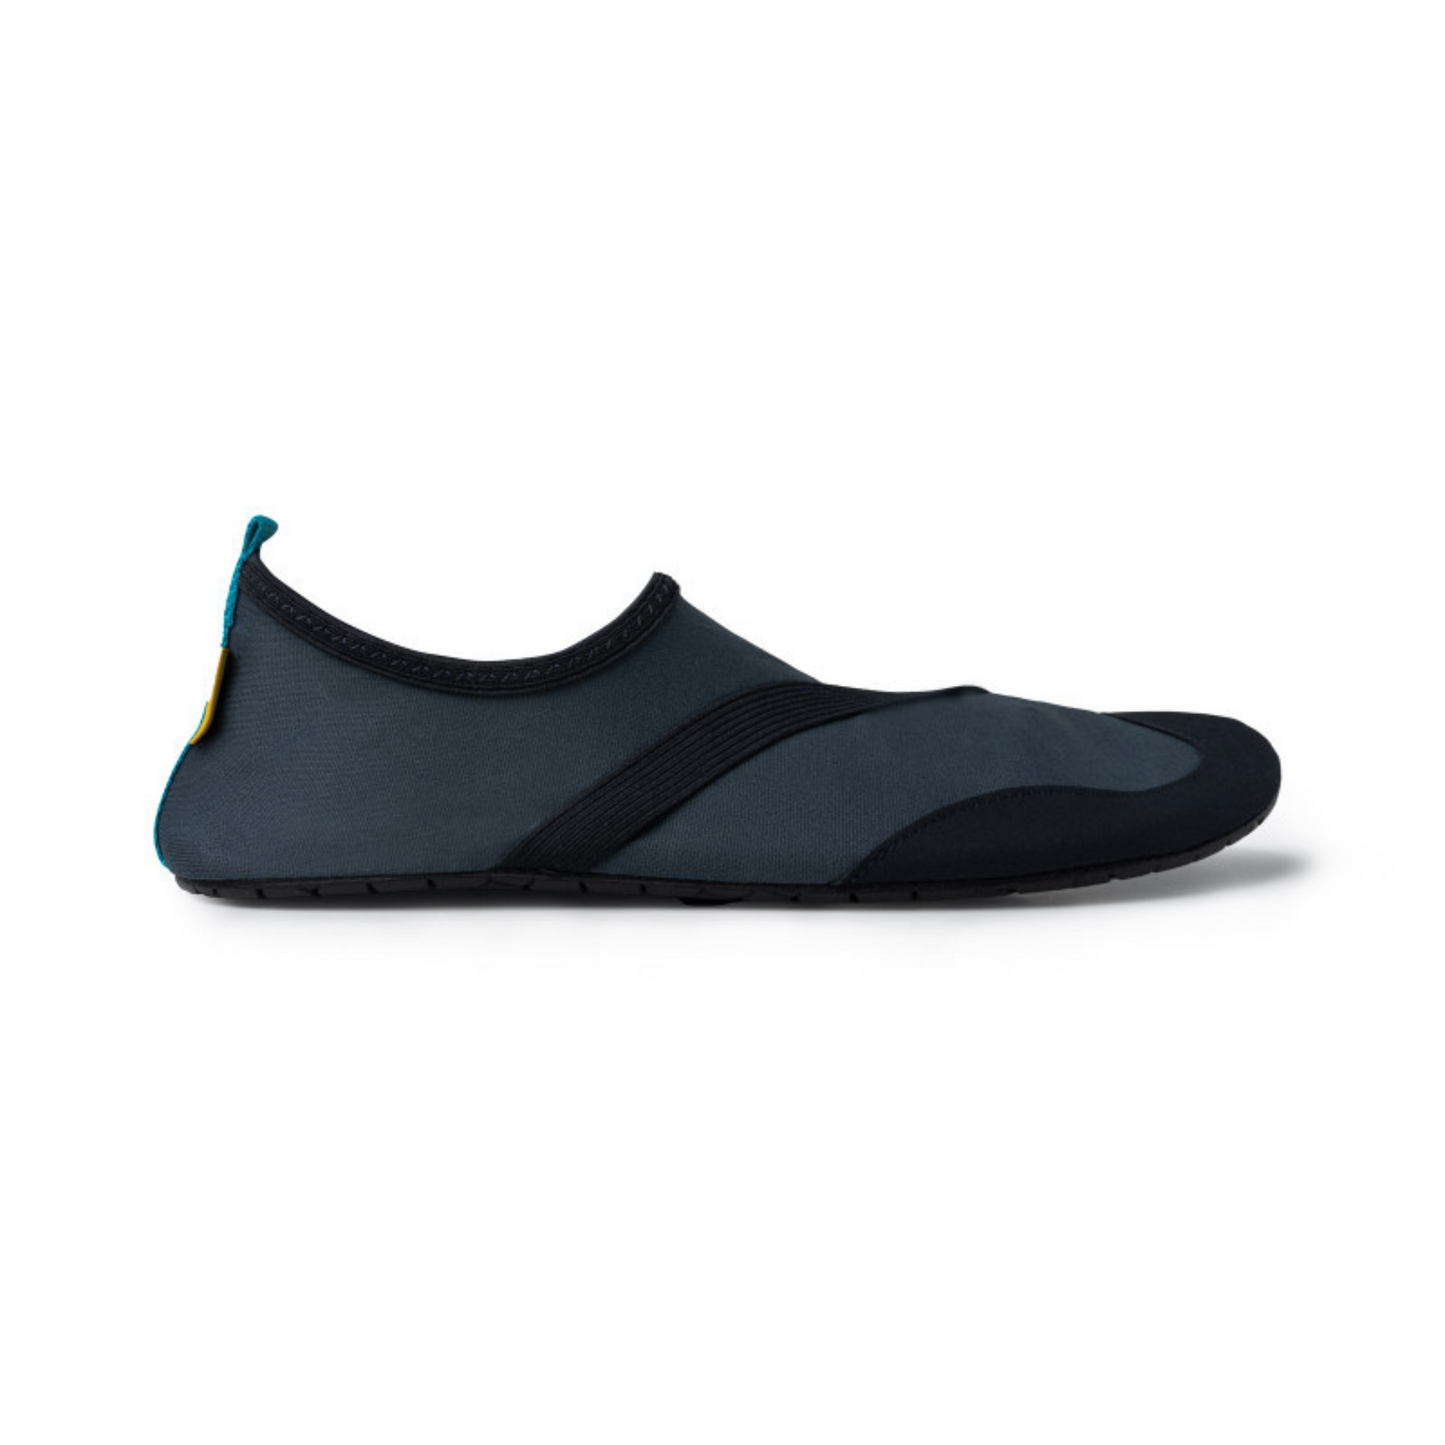 fit kicks activewear mens shoe in charcoal